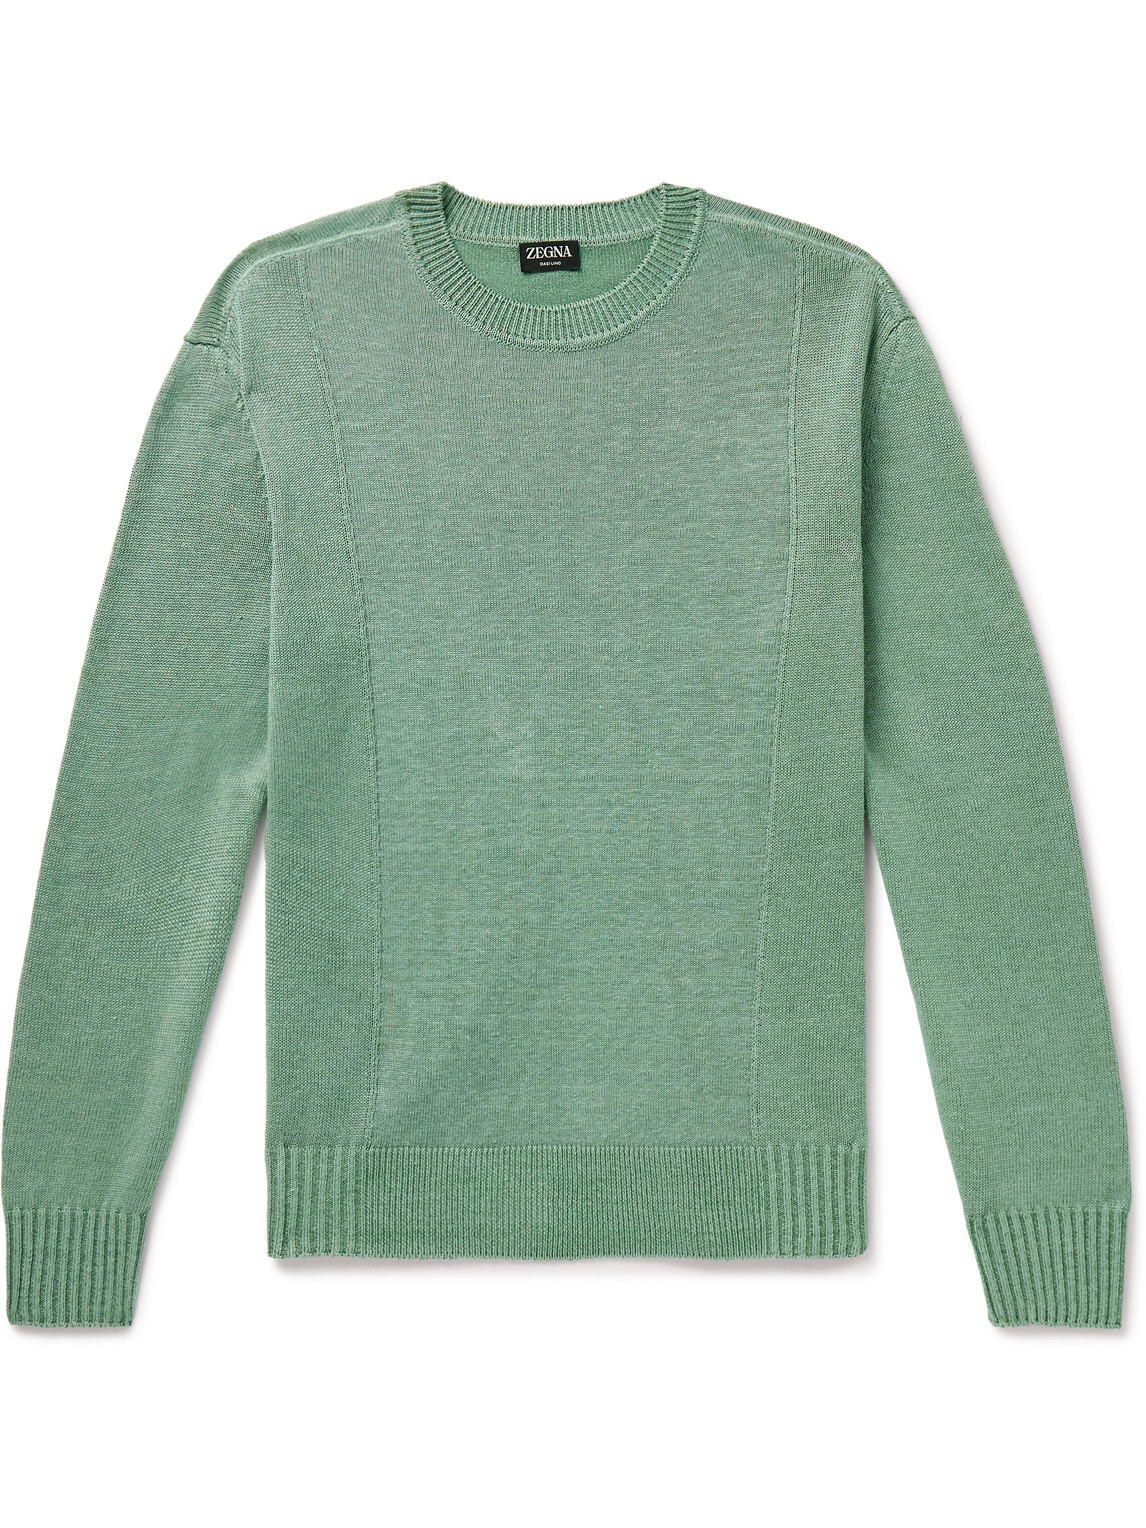 Zegna Linen And Silk-blend Sweater In Green